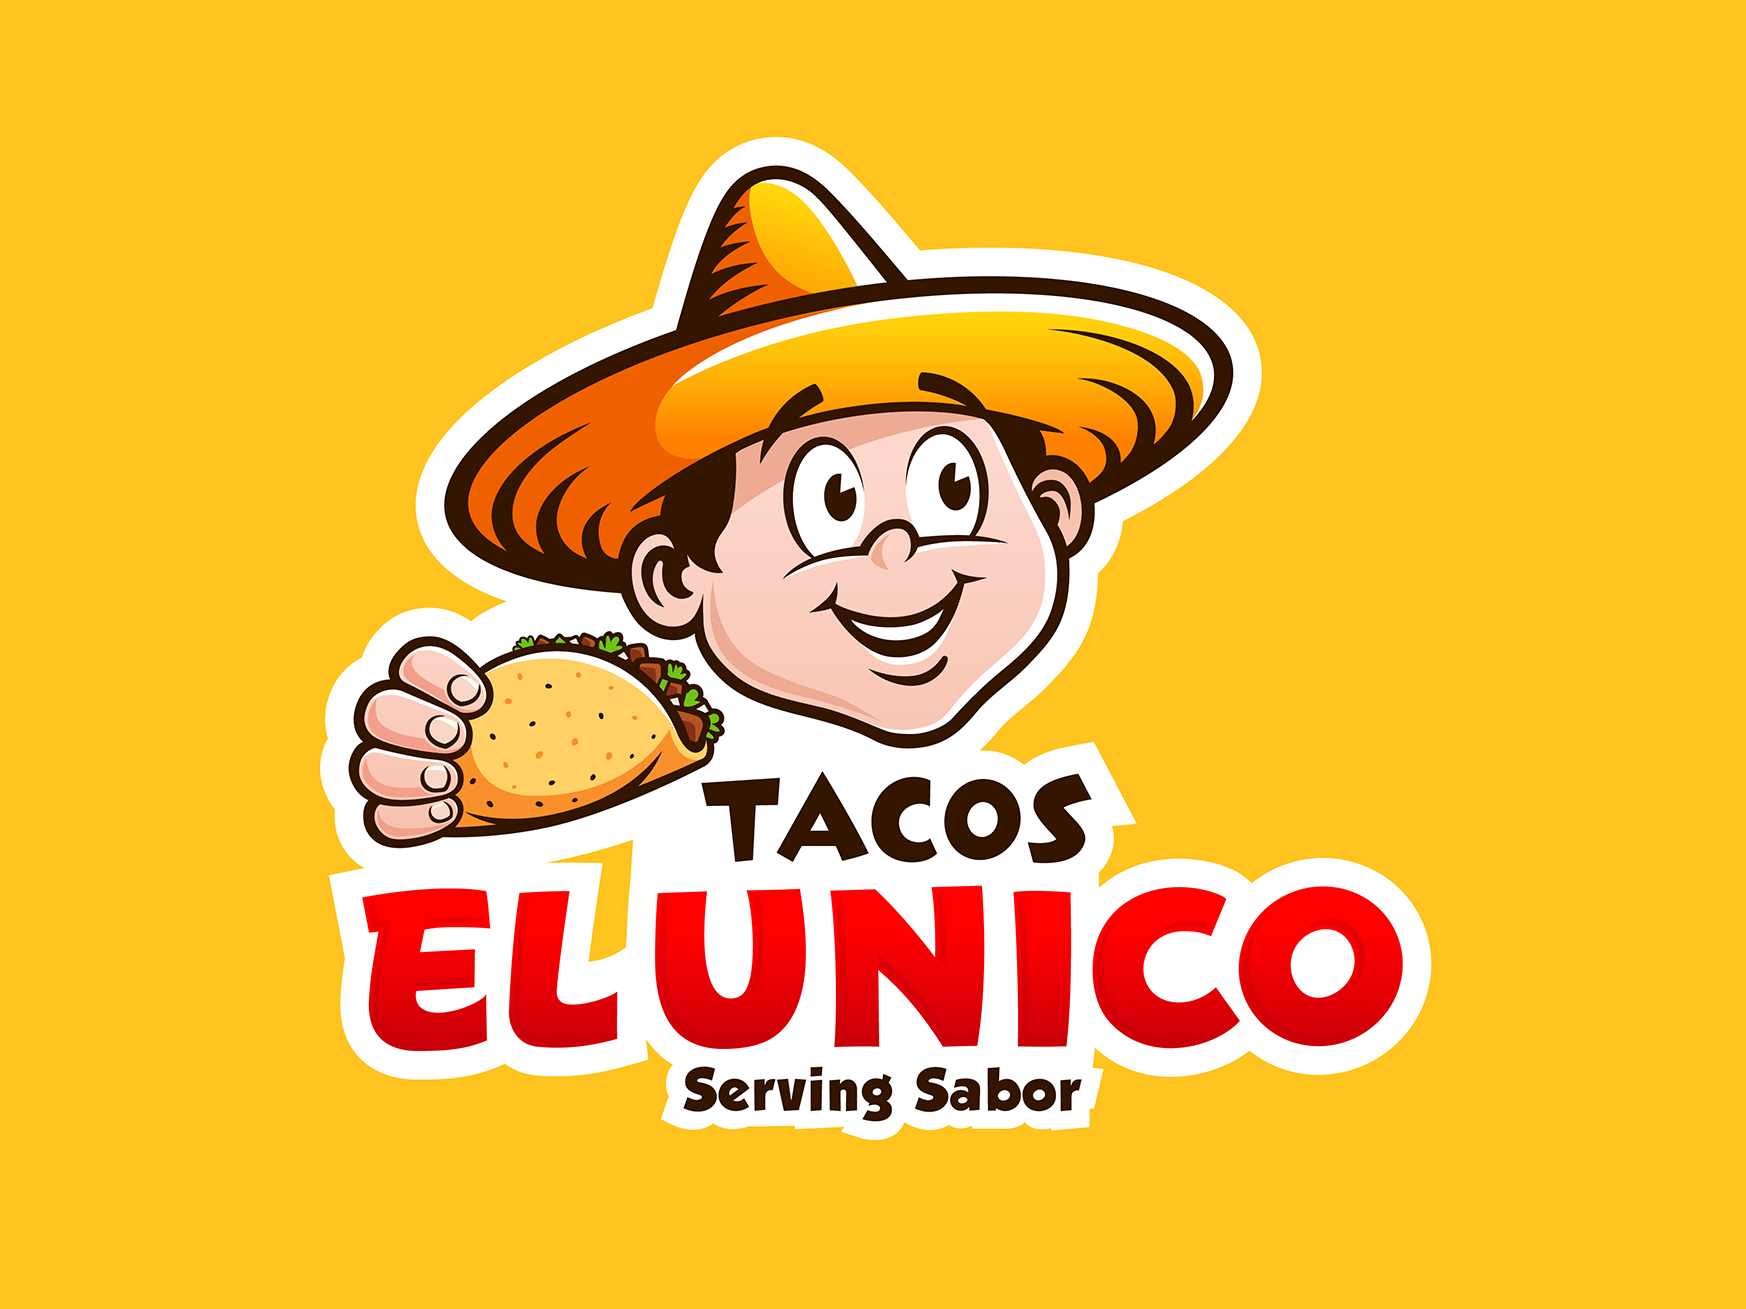 Tacos El Unico / Restaurant.